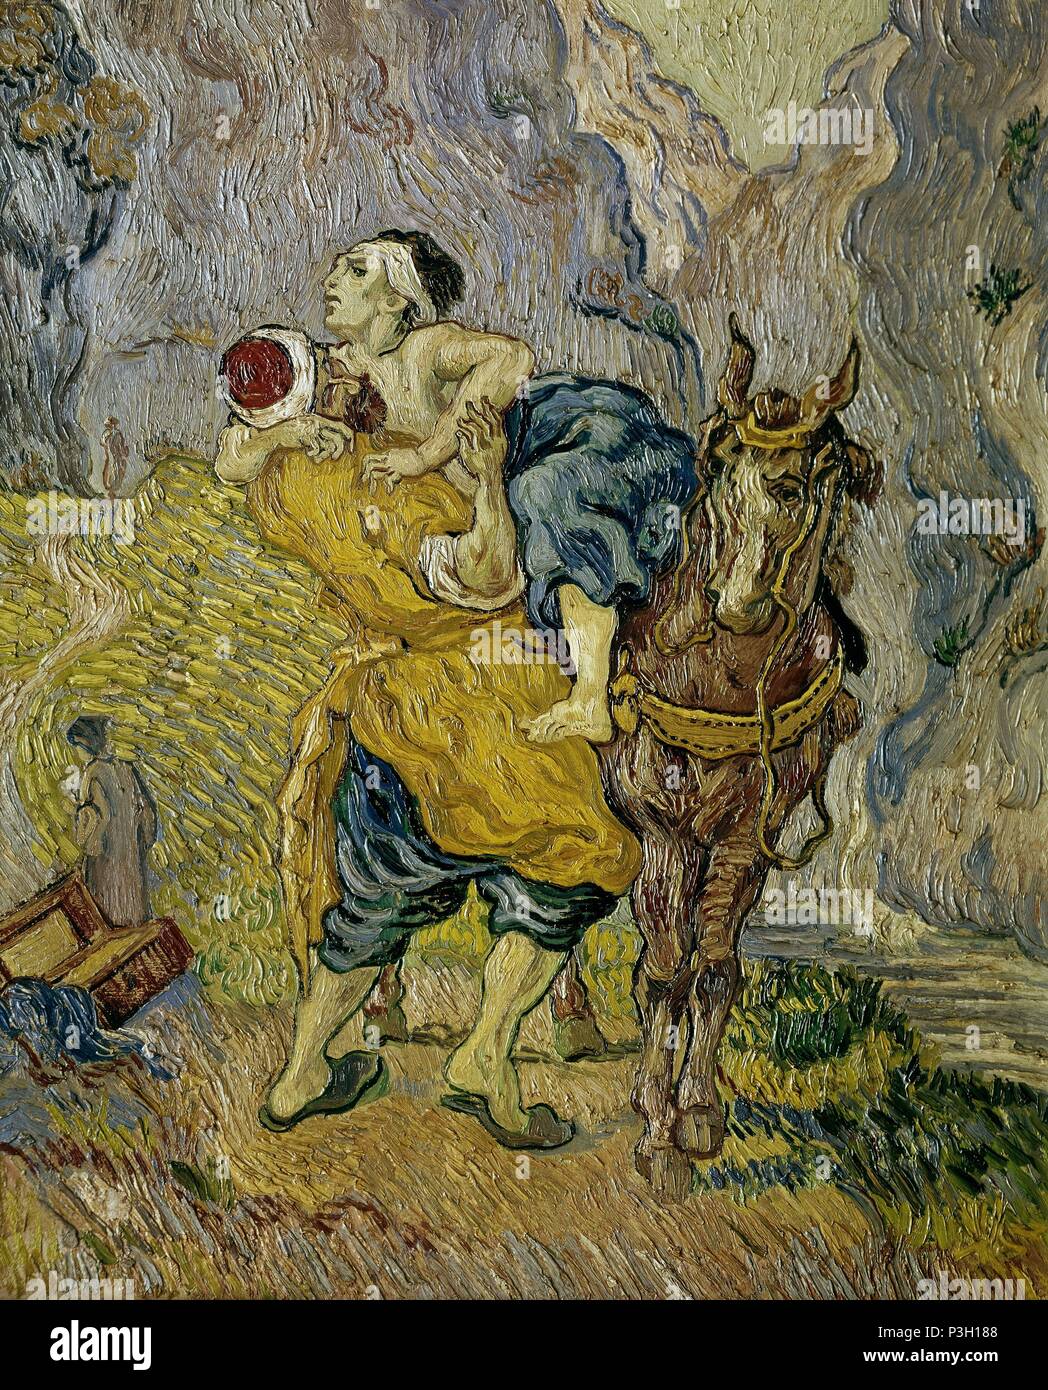 Dutch school. The Good Samaritan (after Delacroix). 1890. Oil on canvas (73 x 60 cm). Otterlo, Rijksmuseum Kröller-Müller. Author: Vincent van Gogh (1853-1890). Location: MUSEO KROLLER-MULLER, OTTERLO, HOLANDA. Stock Photo